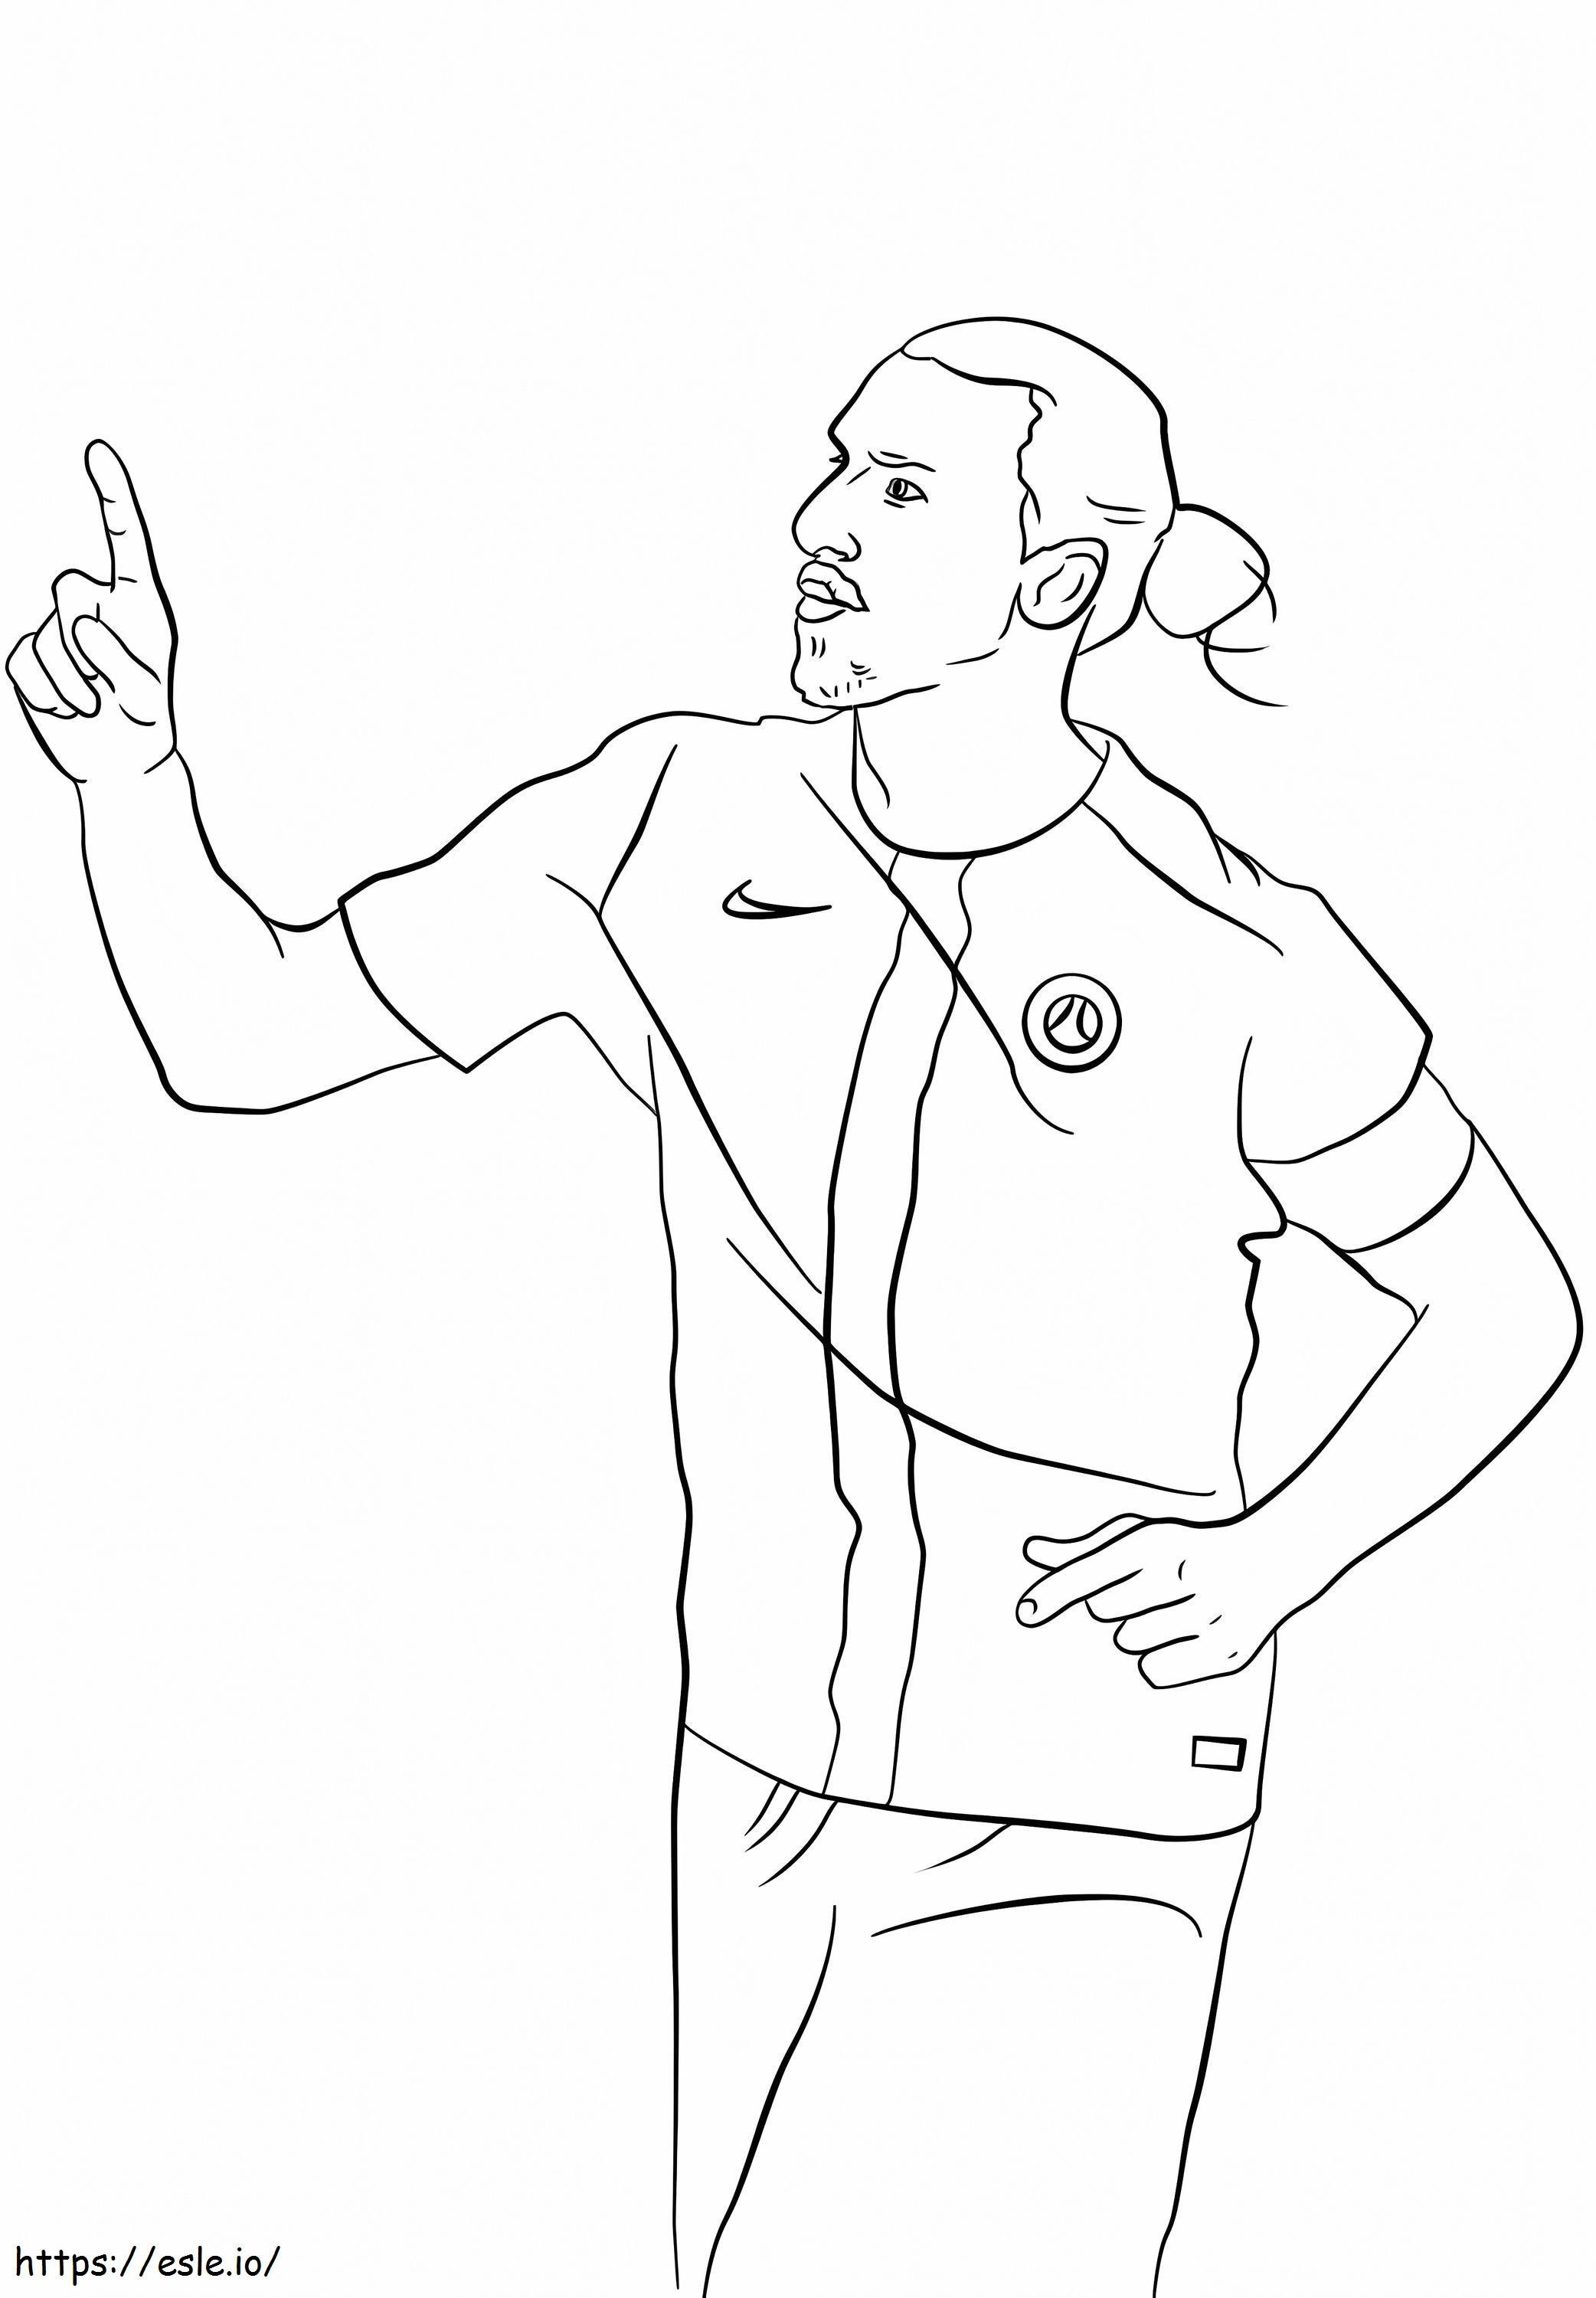 Zlatan Ibrahimovic 1 kleurplaat kleurplaat